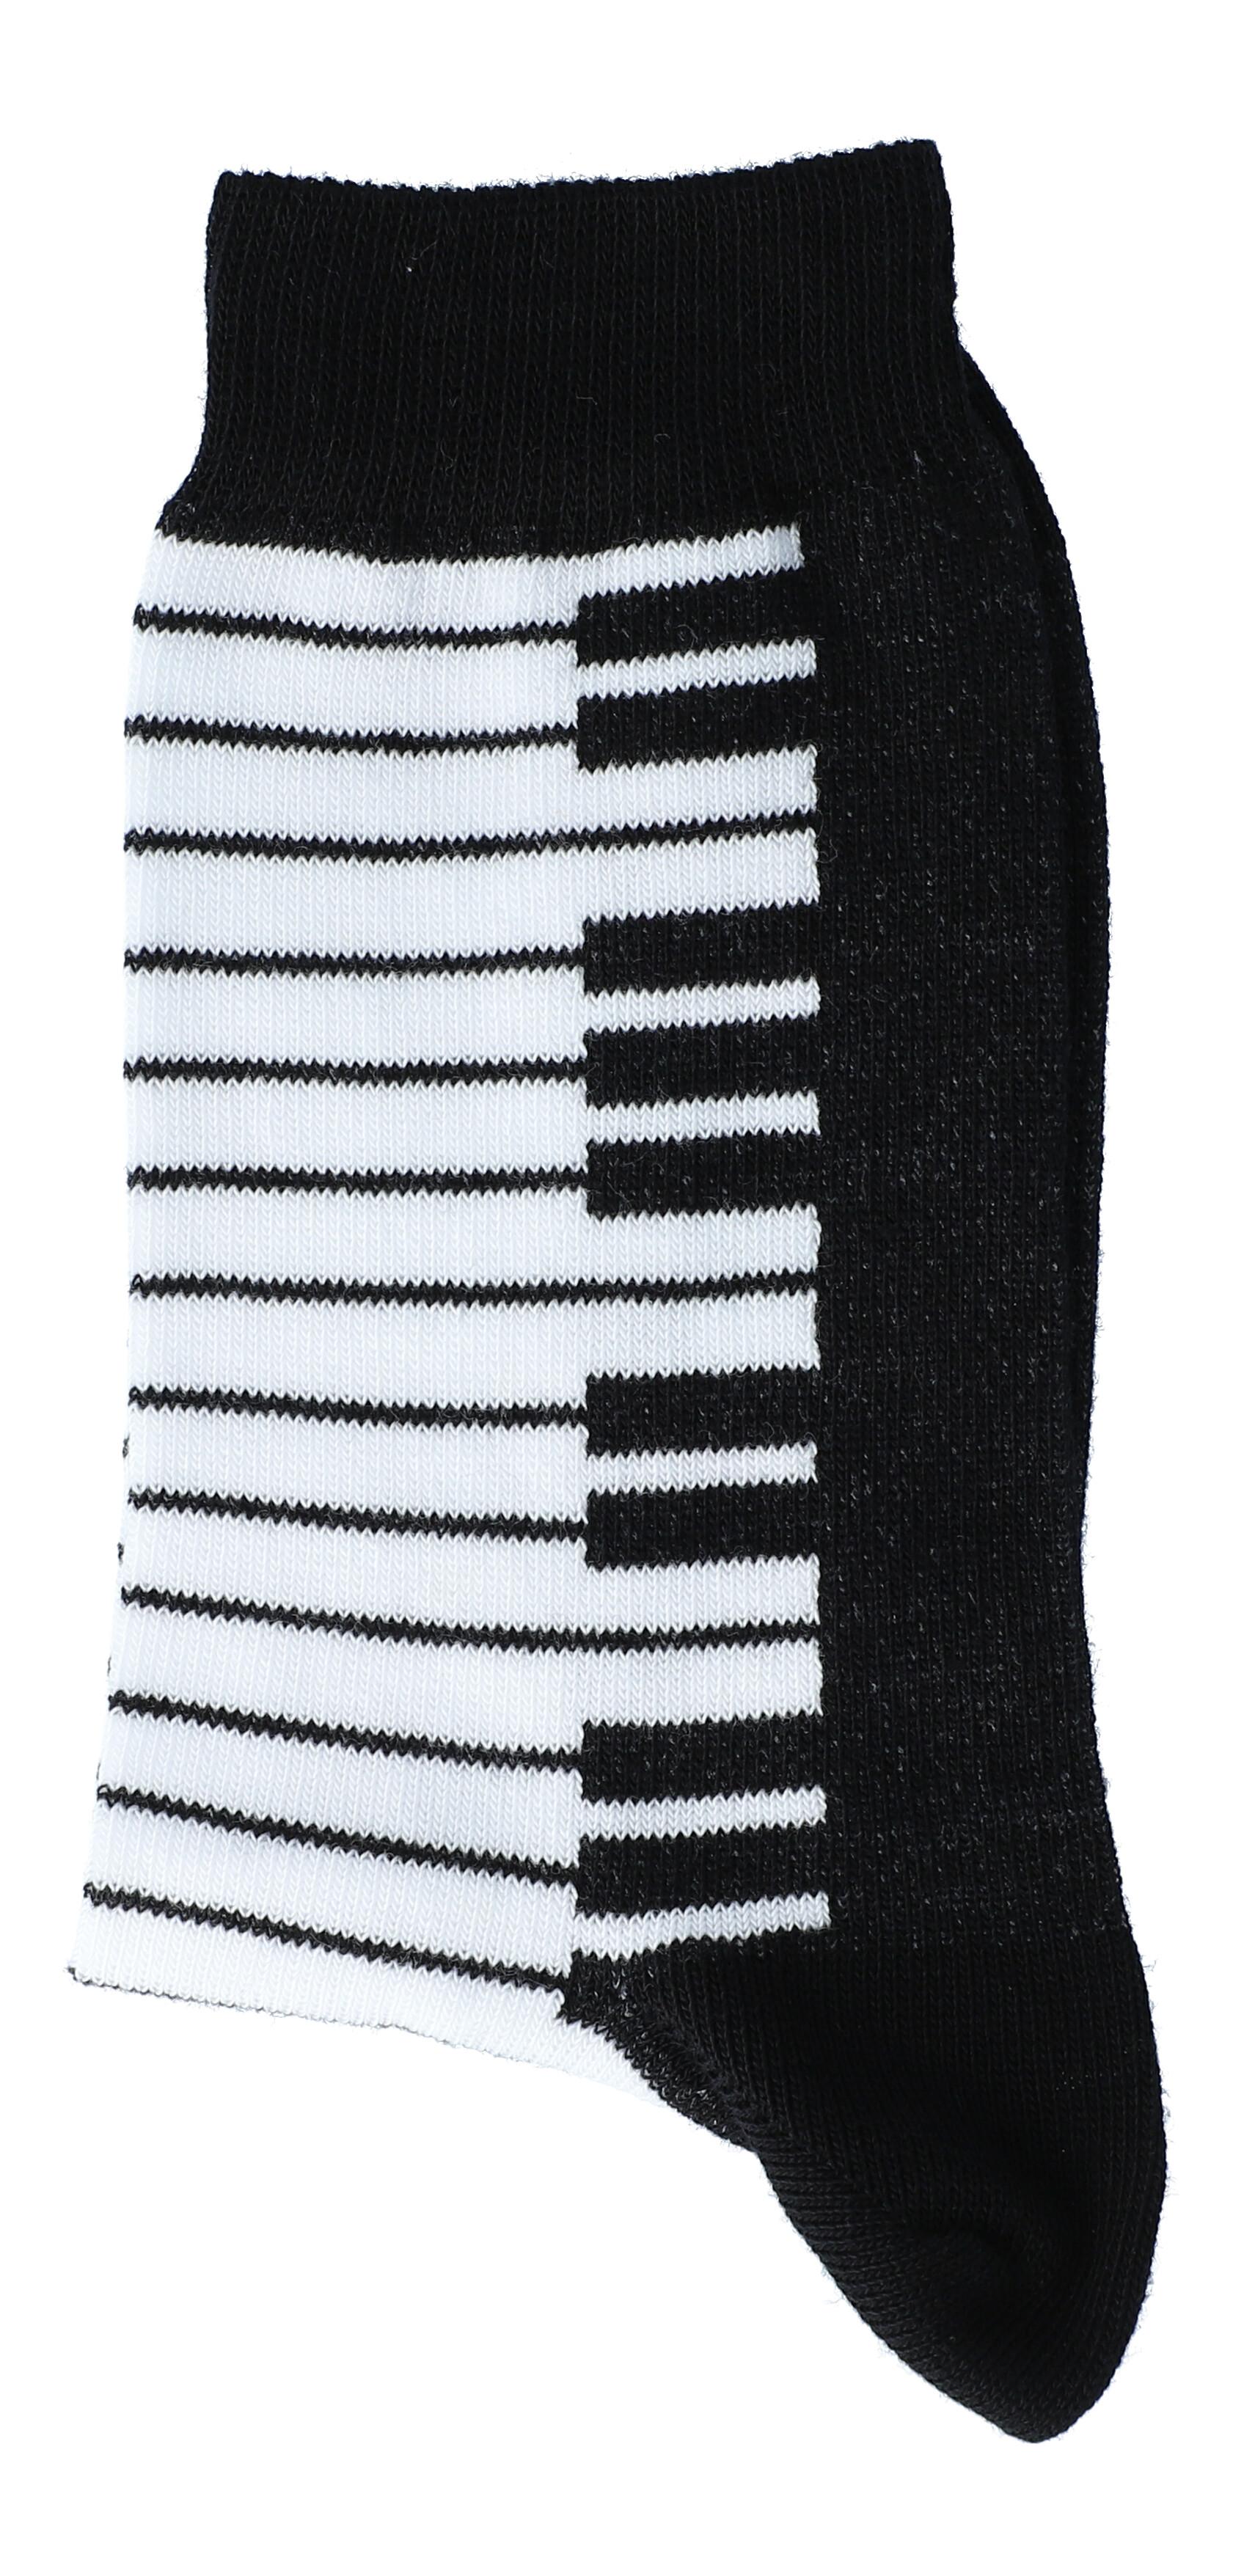 Socken Tastatur -Schwarz Gr. 35-38